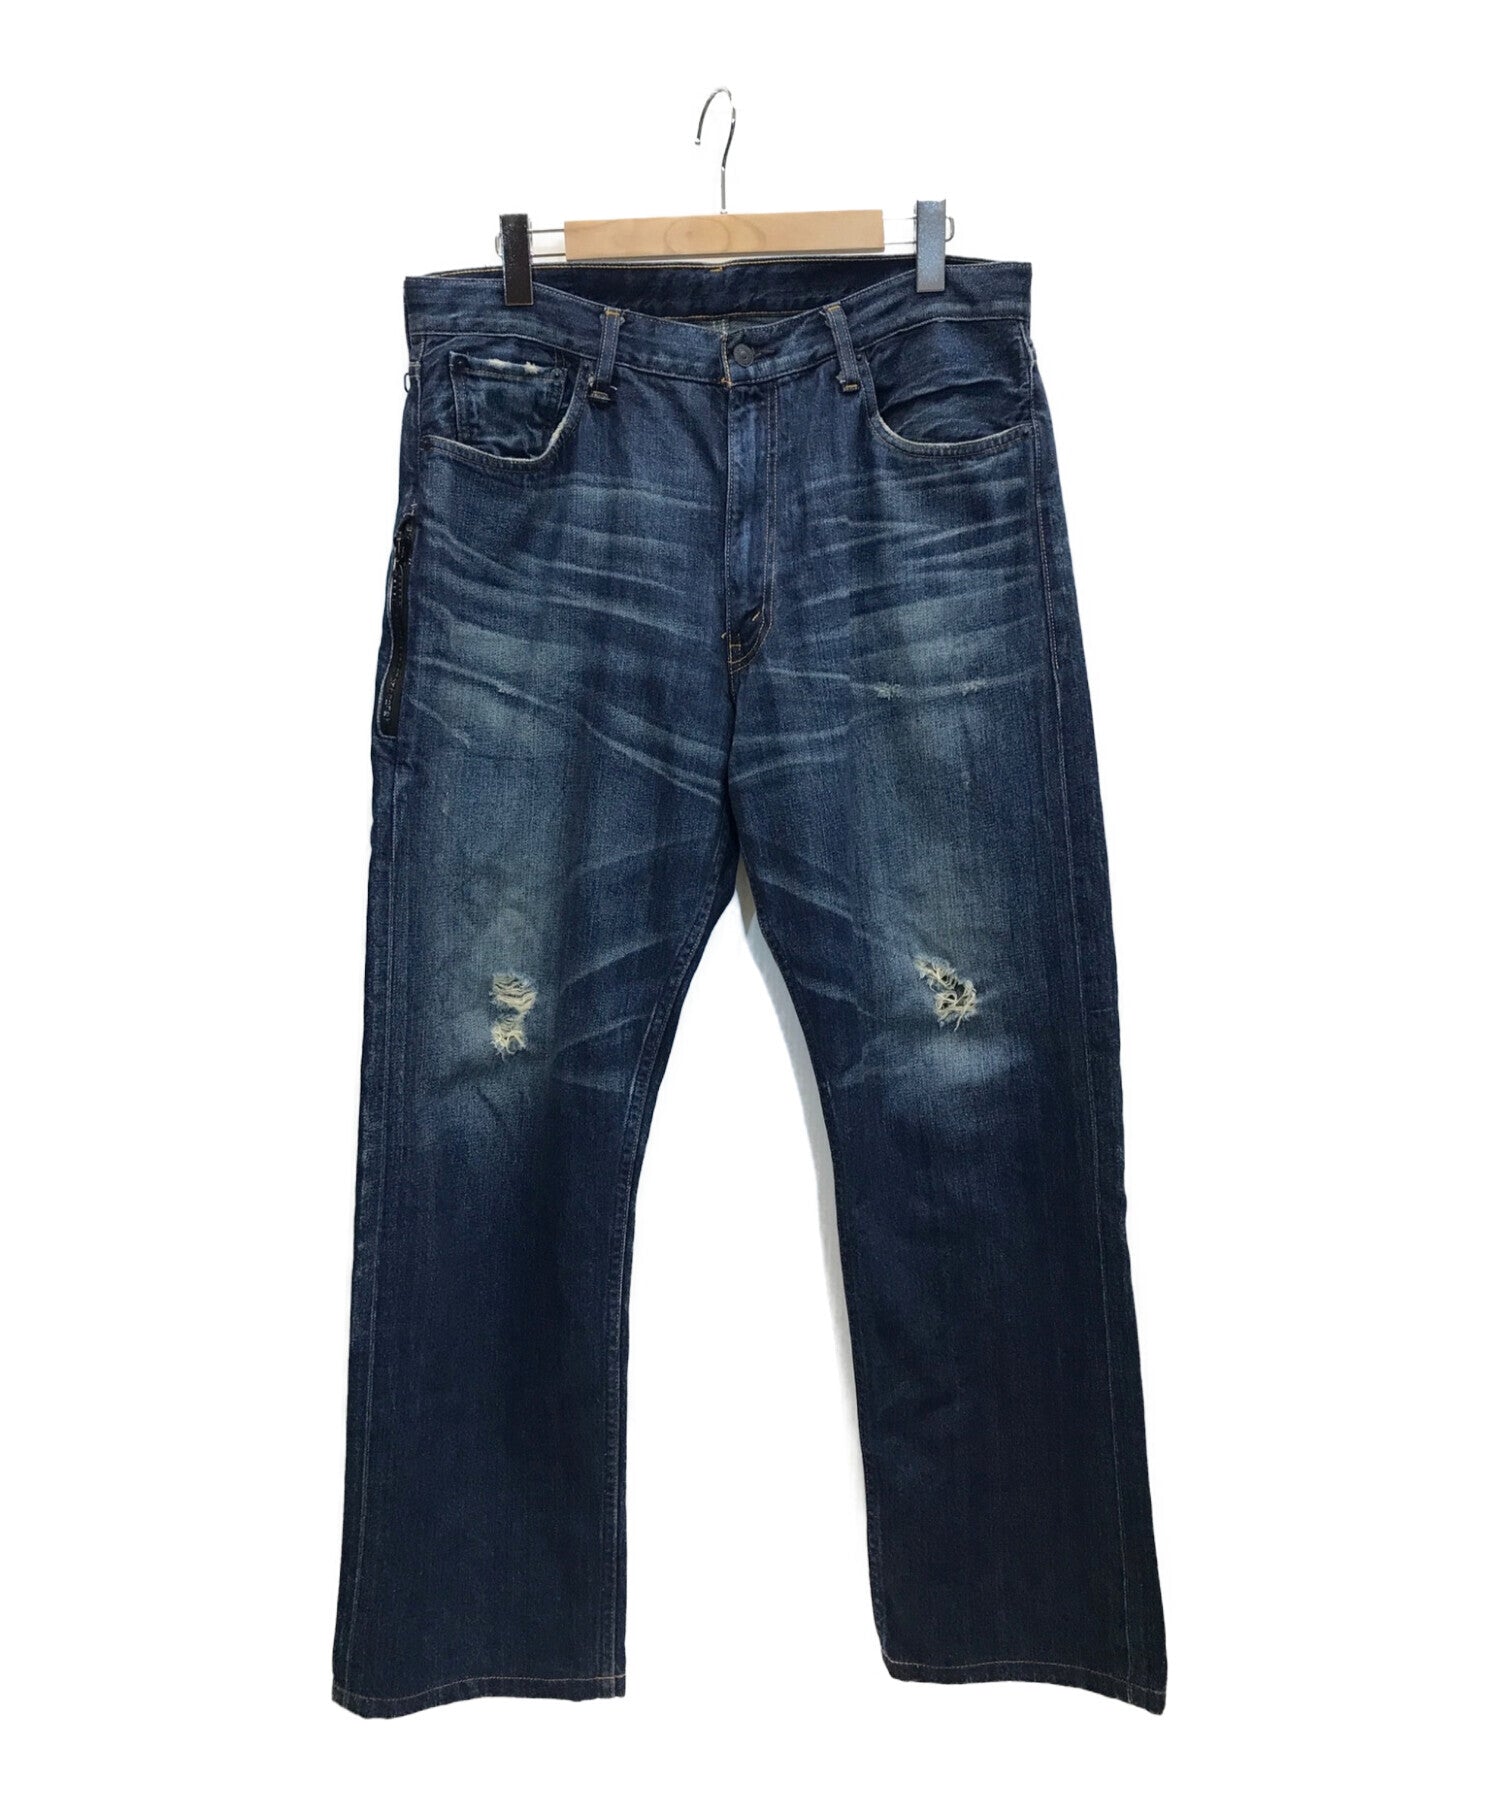 Levi's Fenom特别订单505繁忙的螺柱牛仔裤UE505-0002 | Archive Factory